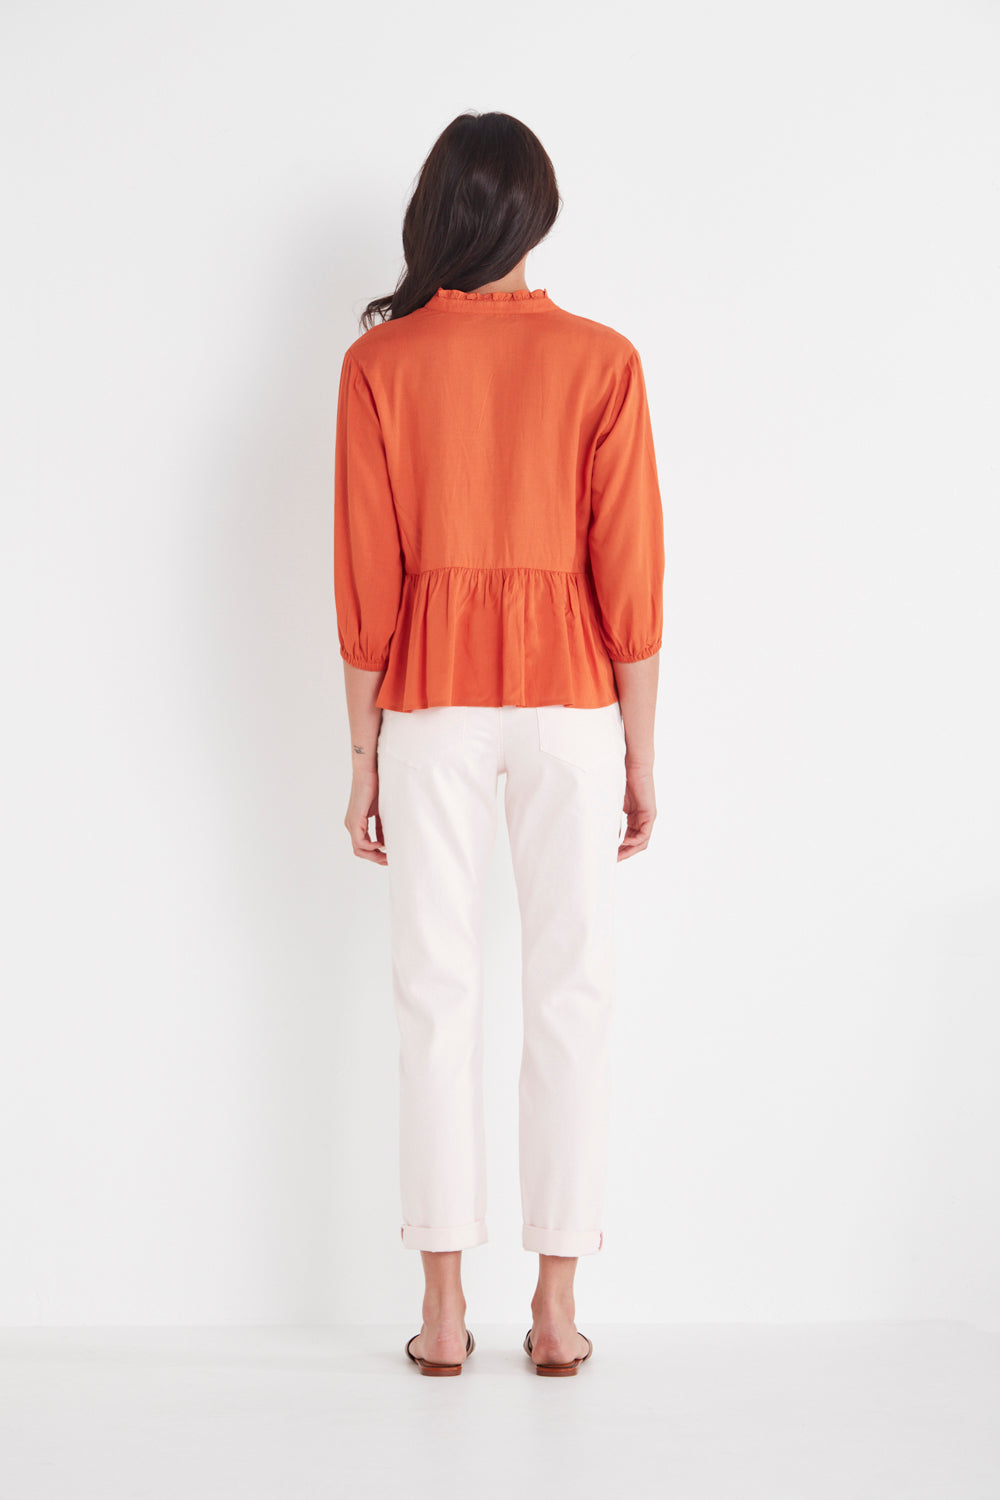 Eliza Shirt - Orange - Shirt VERGE